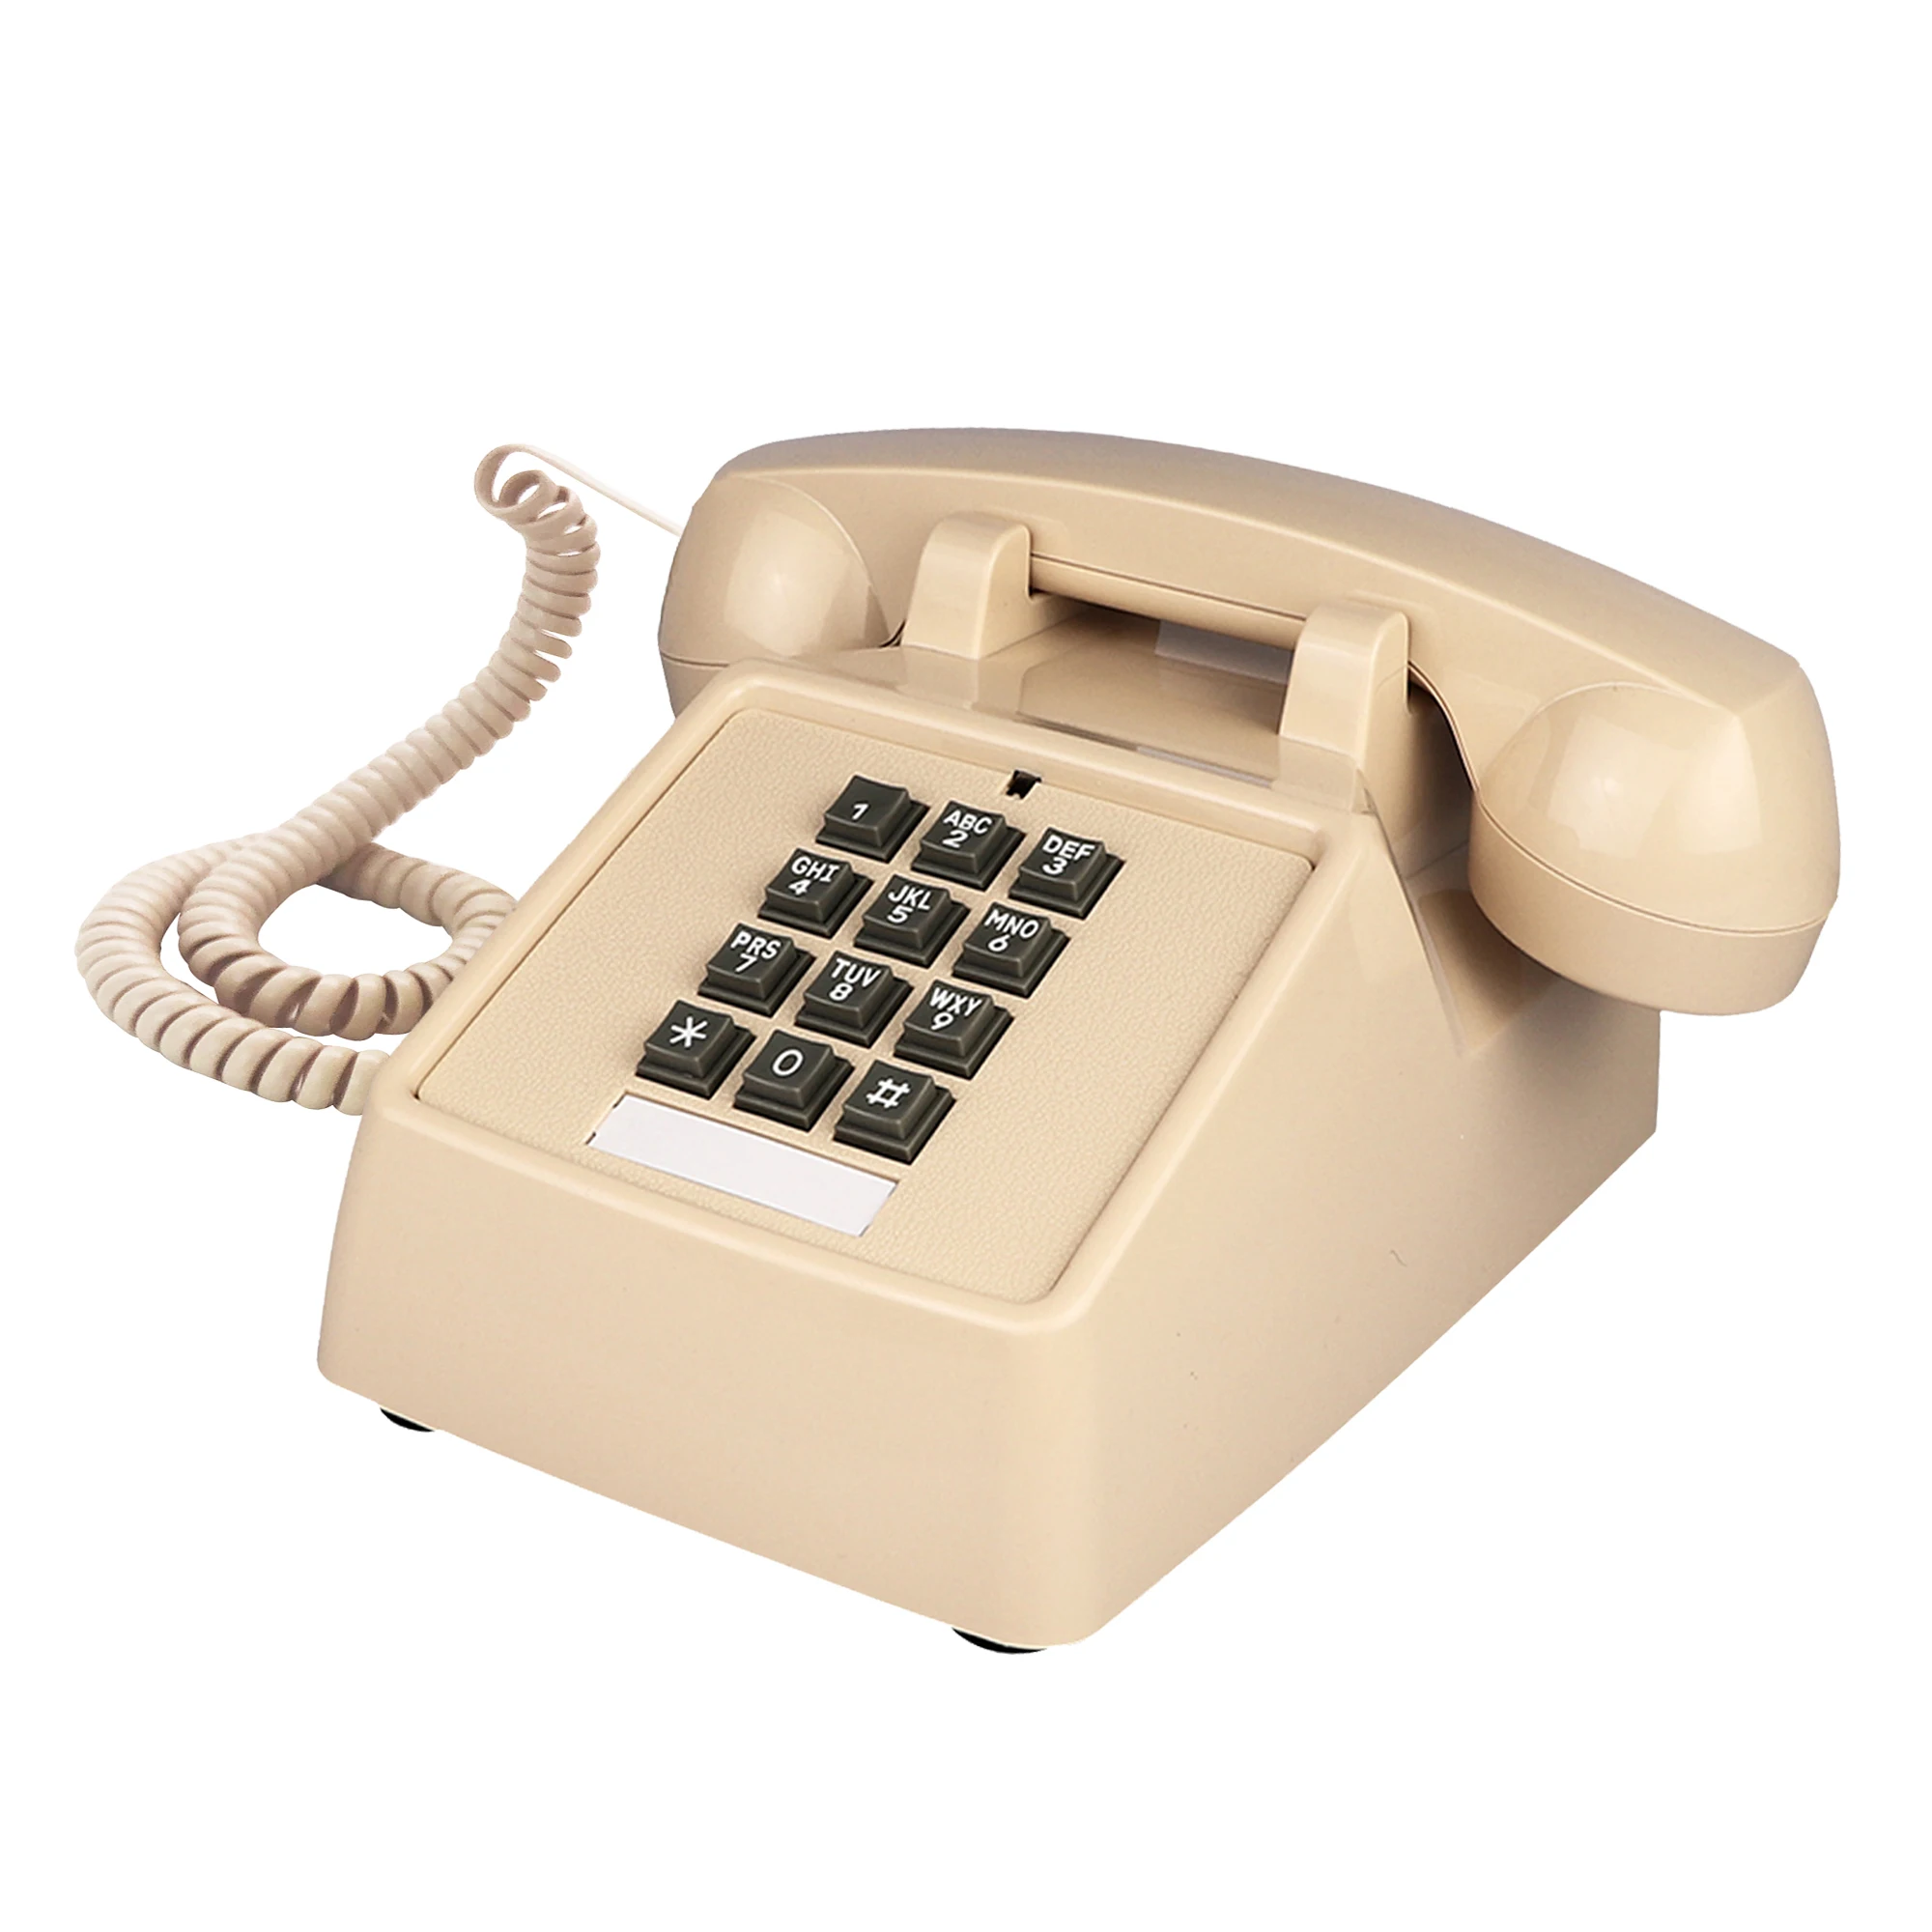 Accessories Landline Phones for Home Office Hotel School Corded Single Line Heavy Desktop Basic Telephone for Seniors Retro Classic Phone